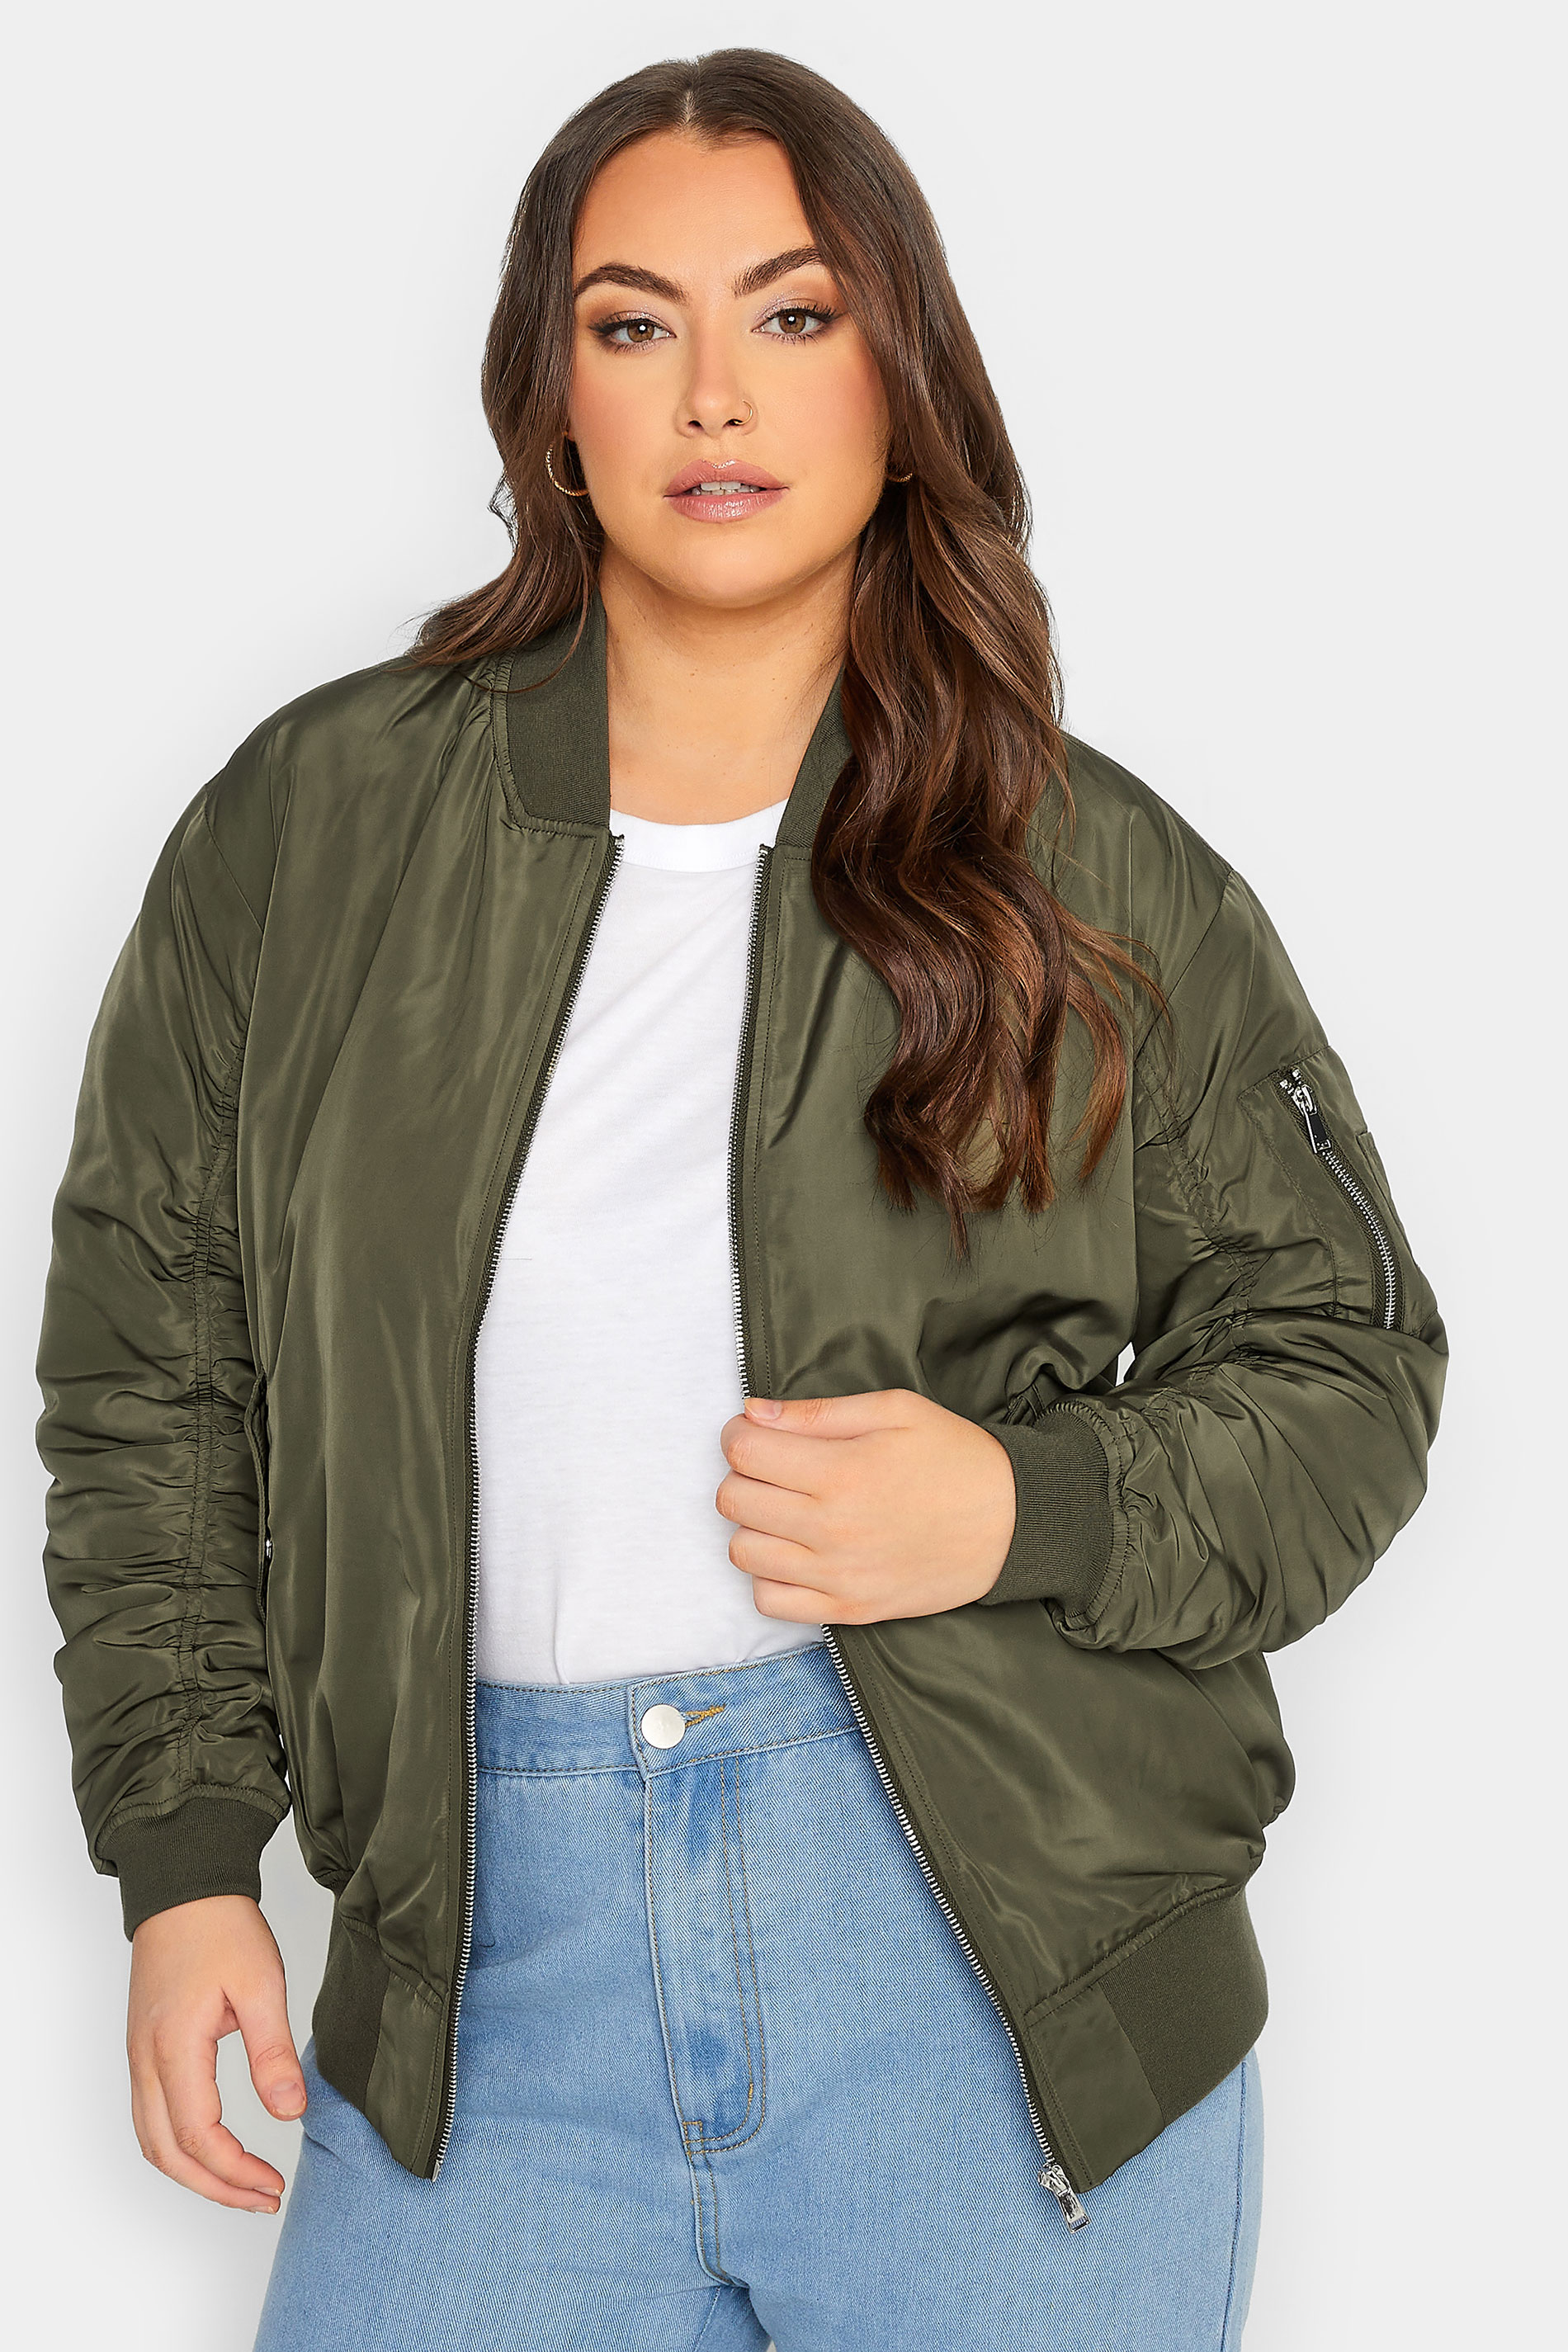 YOURS Plus Size Curve Khaki Green Bomber Jacket | Yours Clothing  1